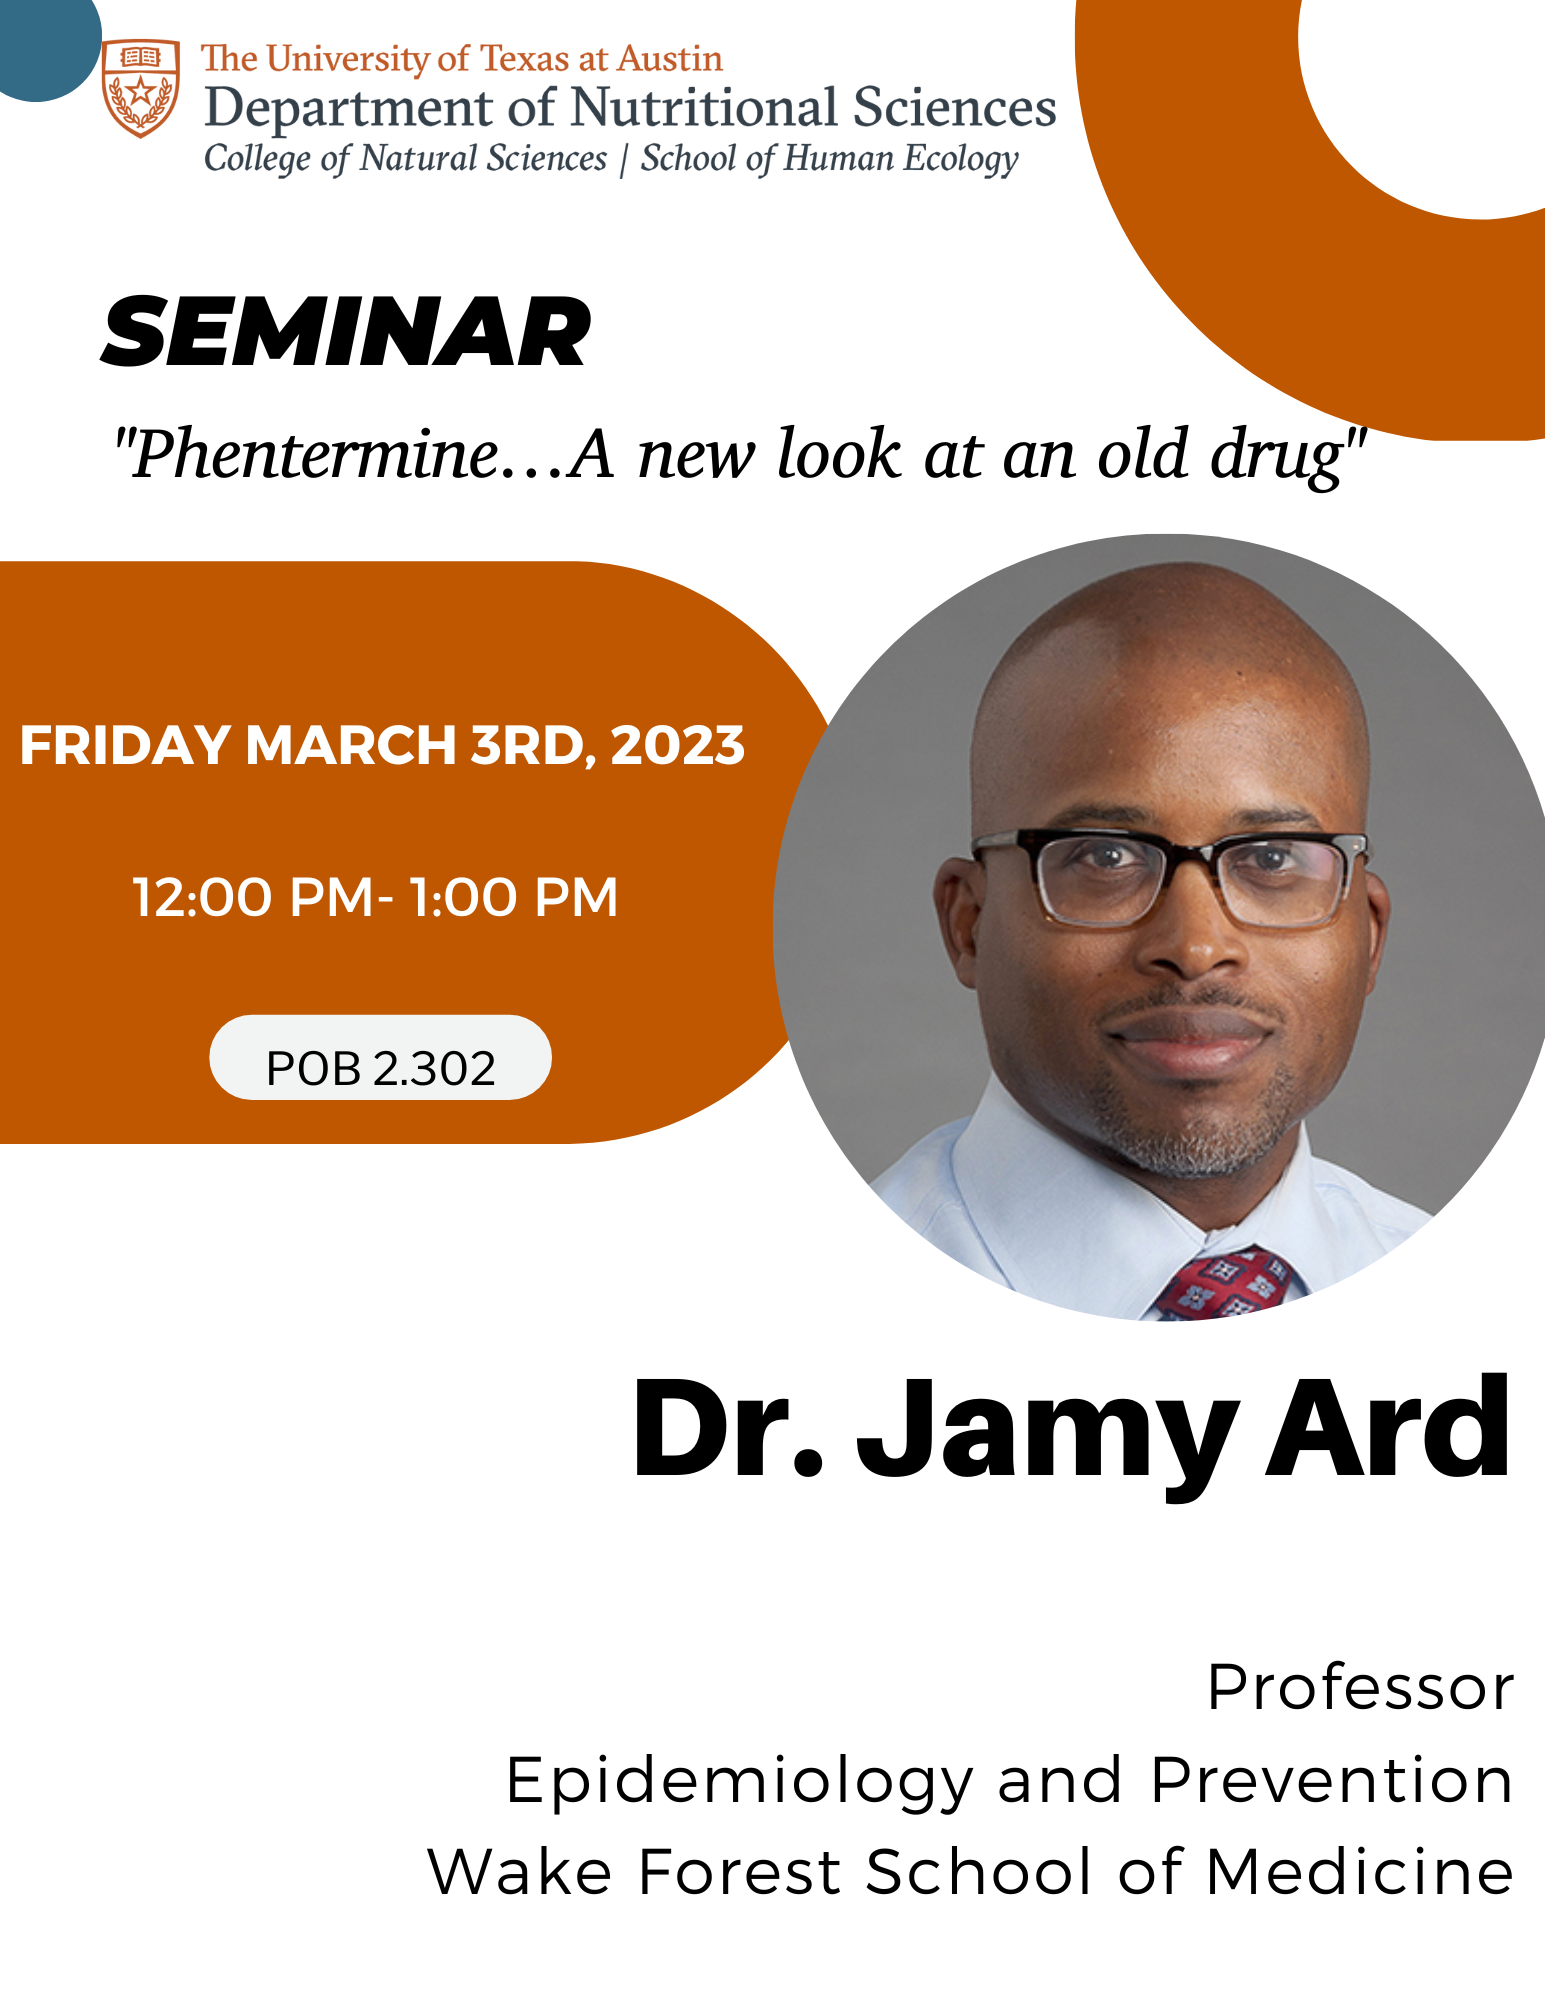 Dr. Jamy Ard